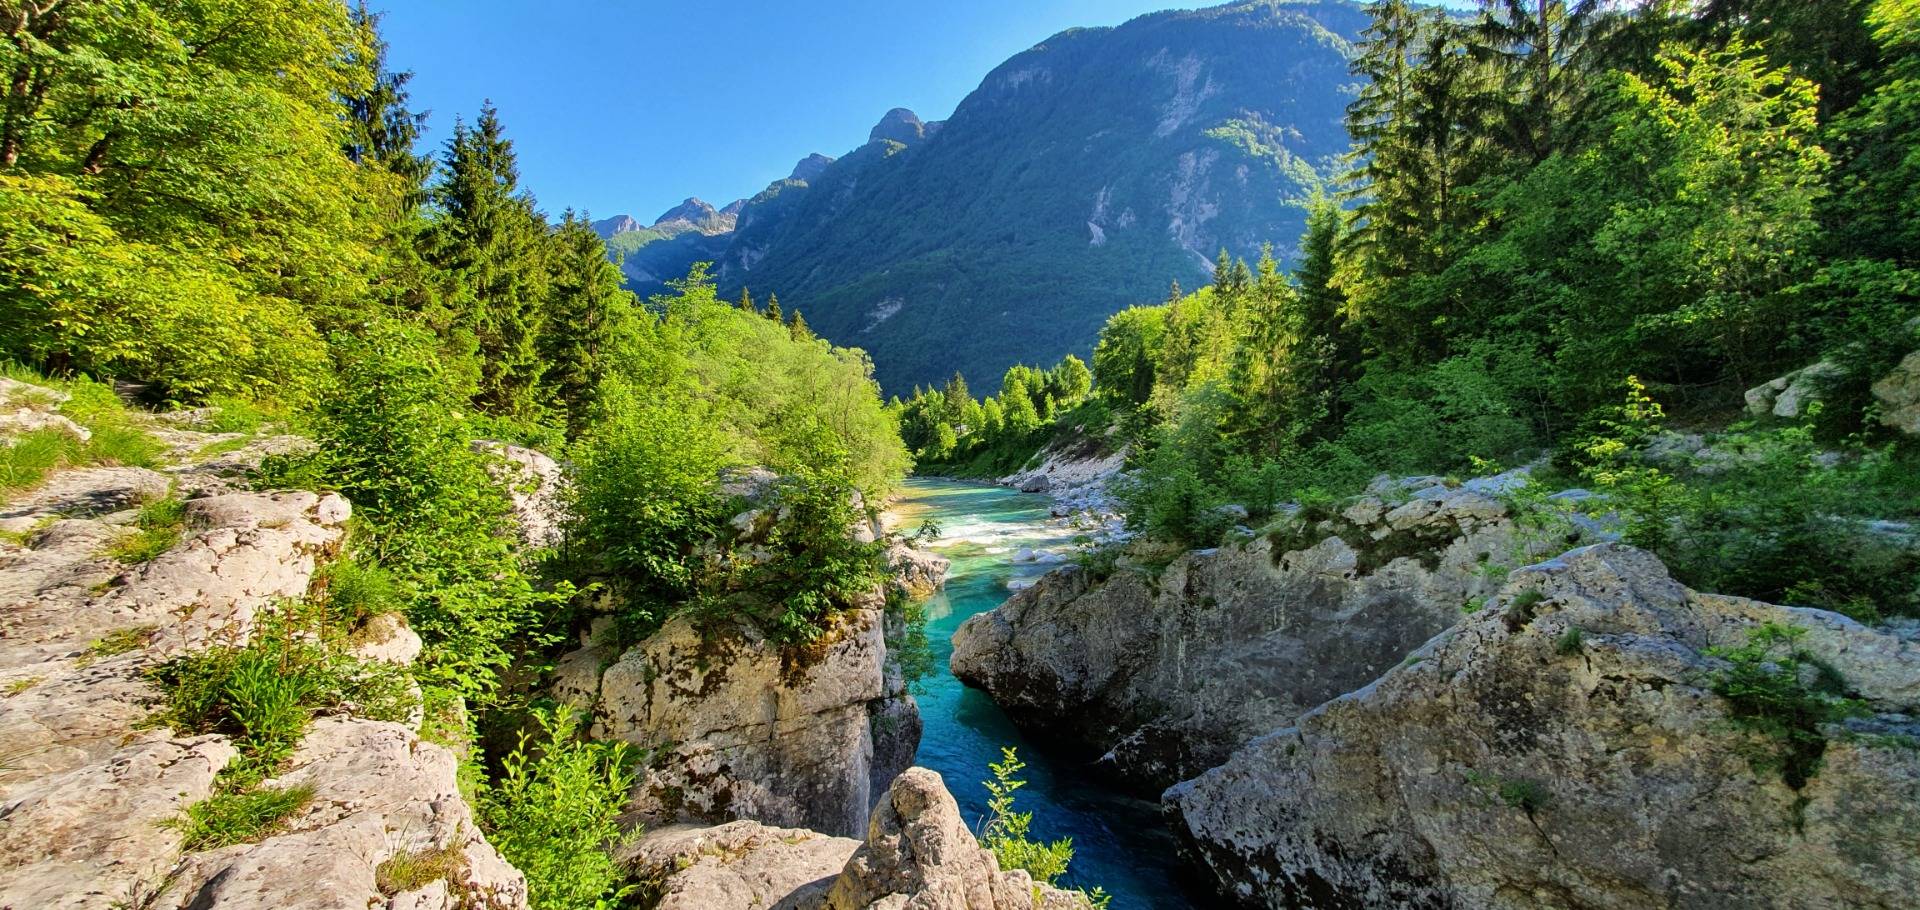 Tour de Slovenia - Soča river & Šunik water grove - 39 photos